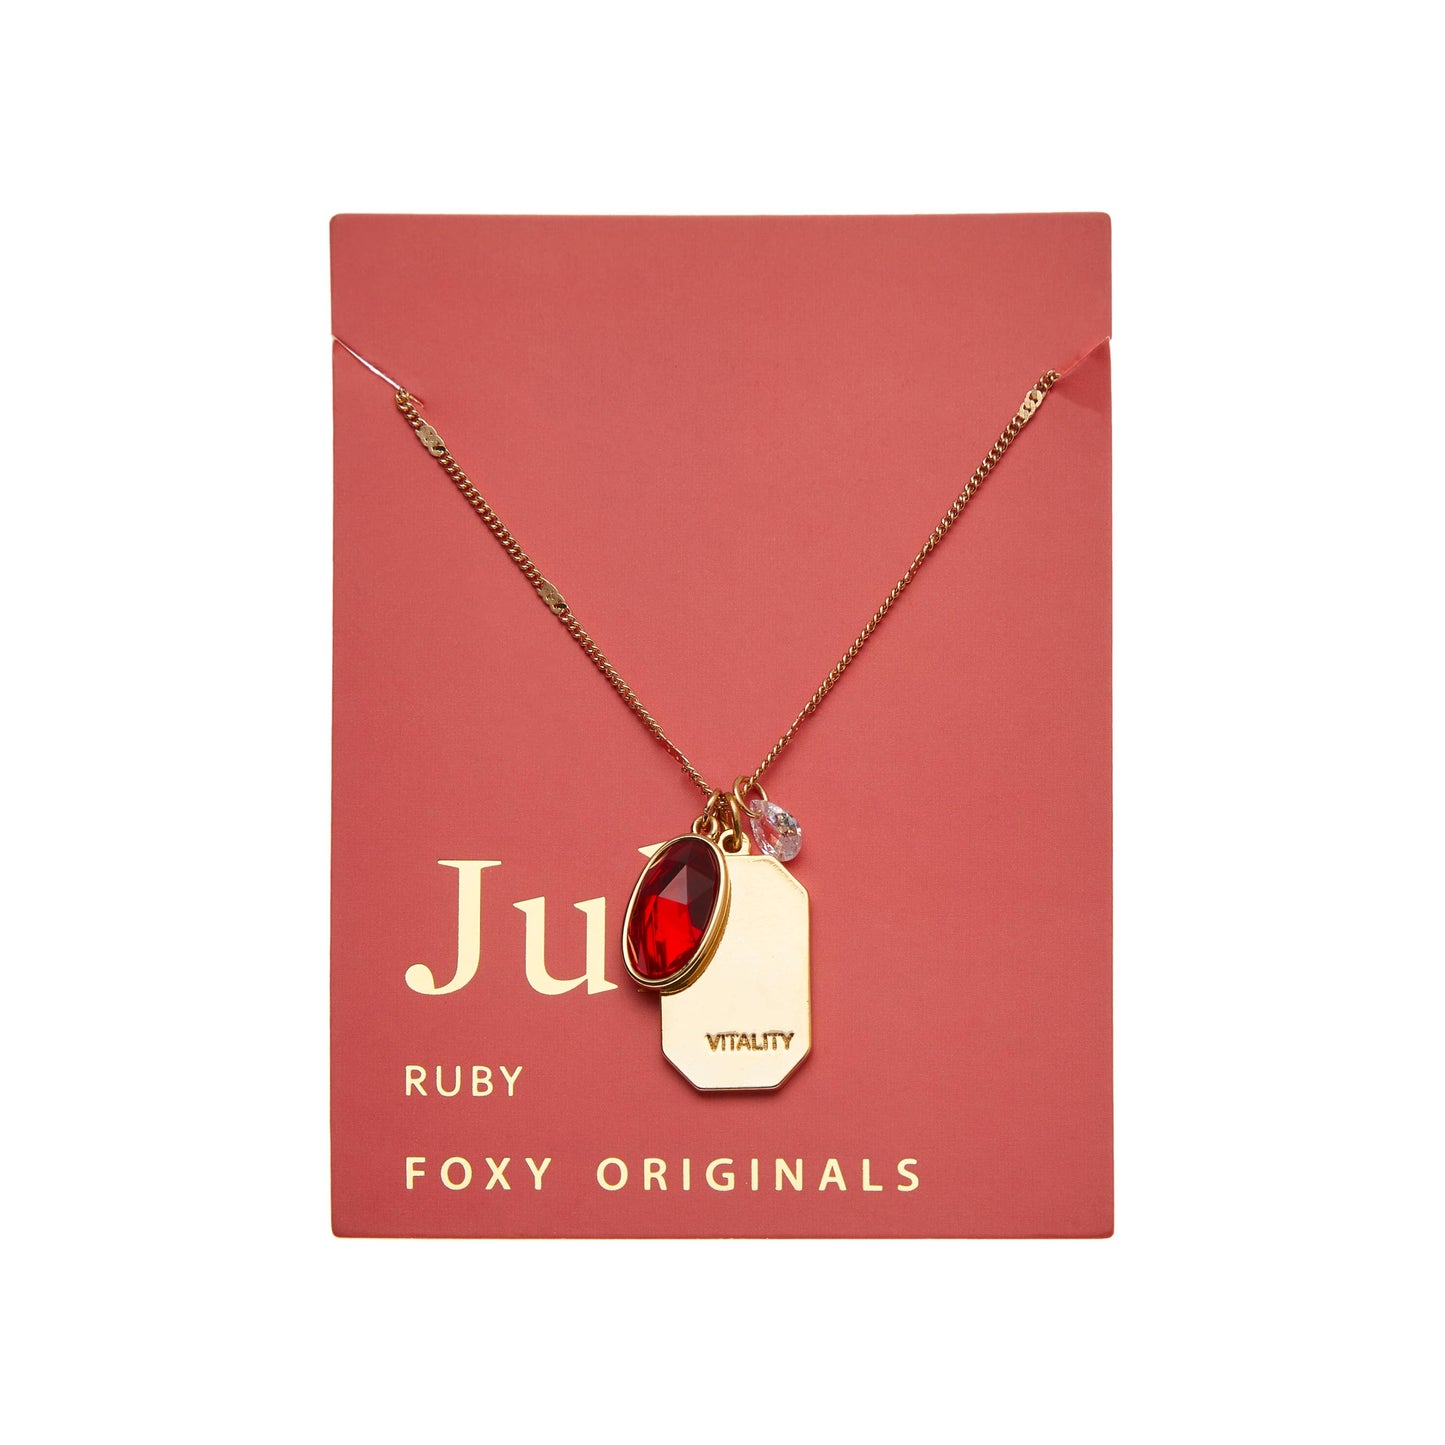 Foxy Originals - July Birthstone Necklace | Gold Jewelry | Birthstone Gift